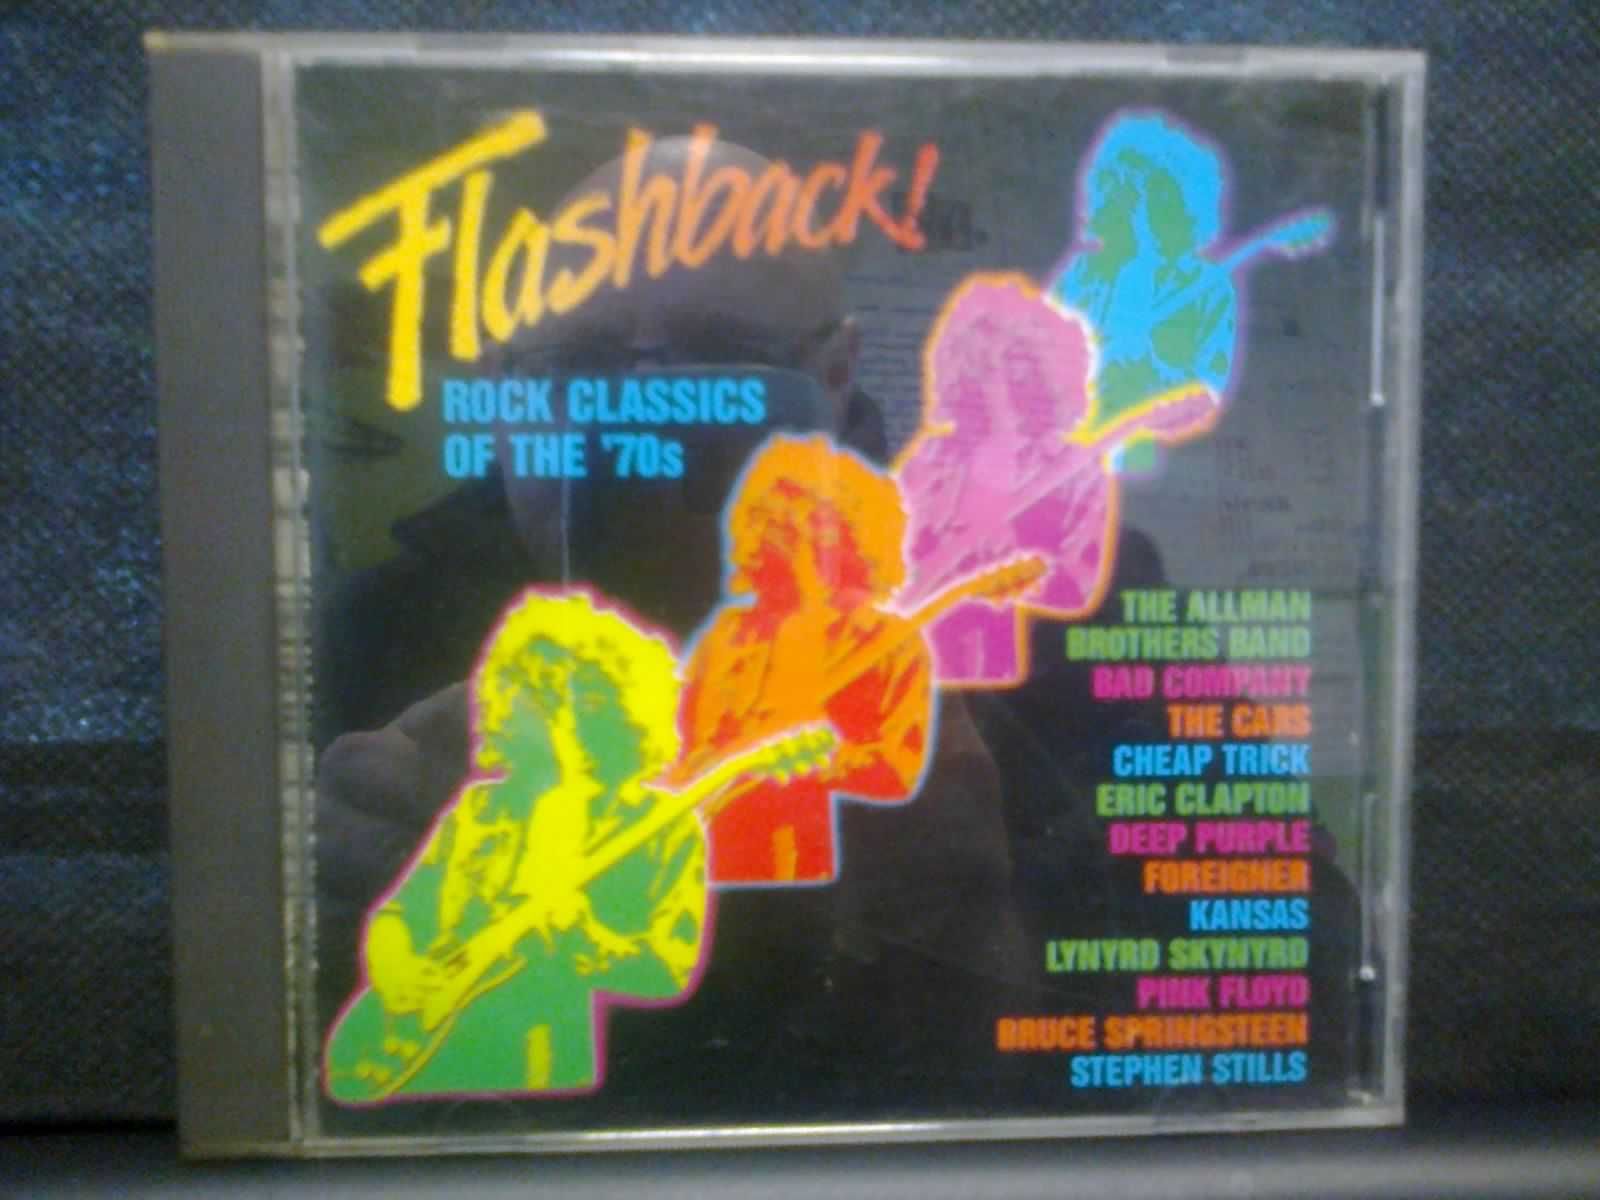 Plyta cd Flashback Rock classics of the 70s 1991